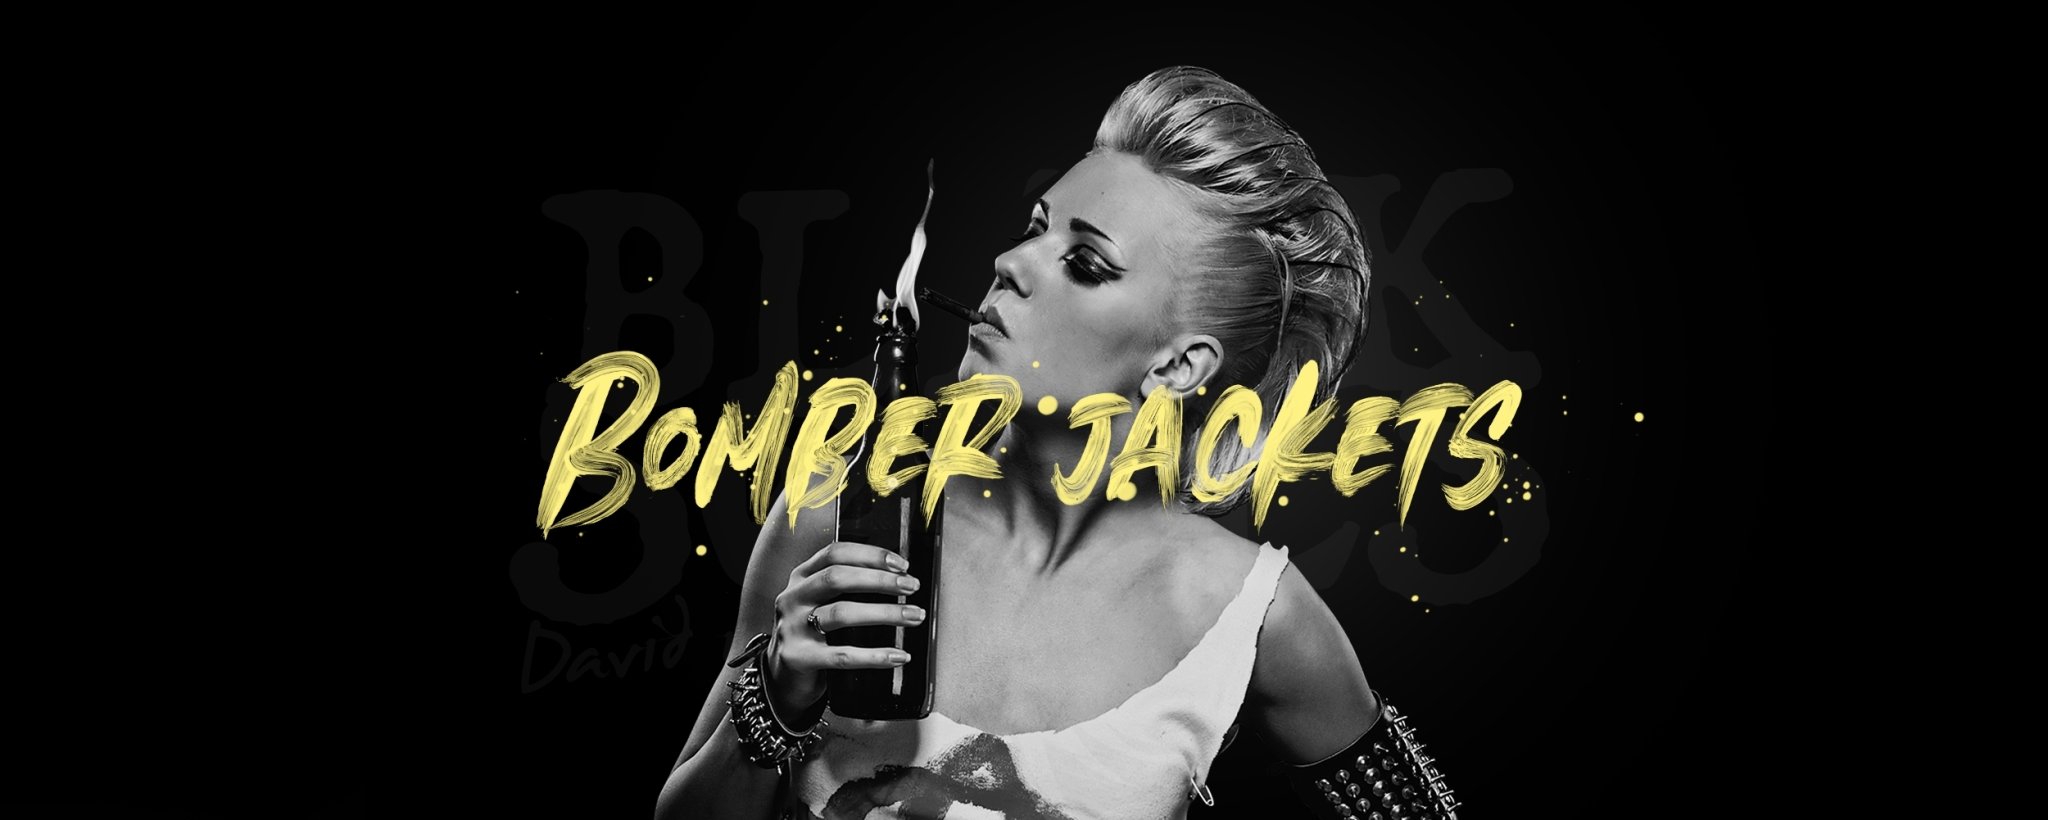 BOMBER JACKET WOMEN | 22BLACKSOULS